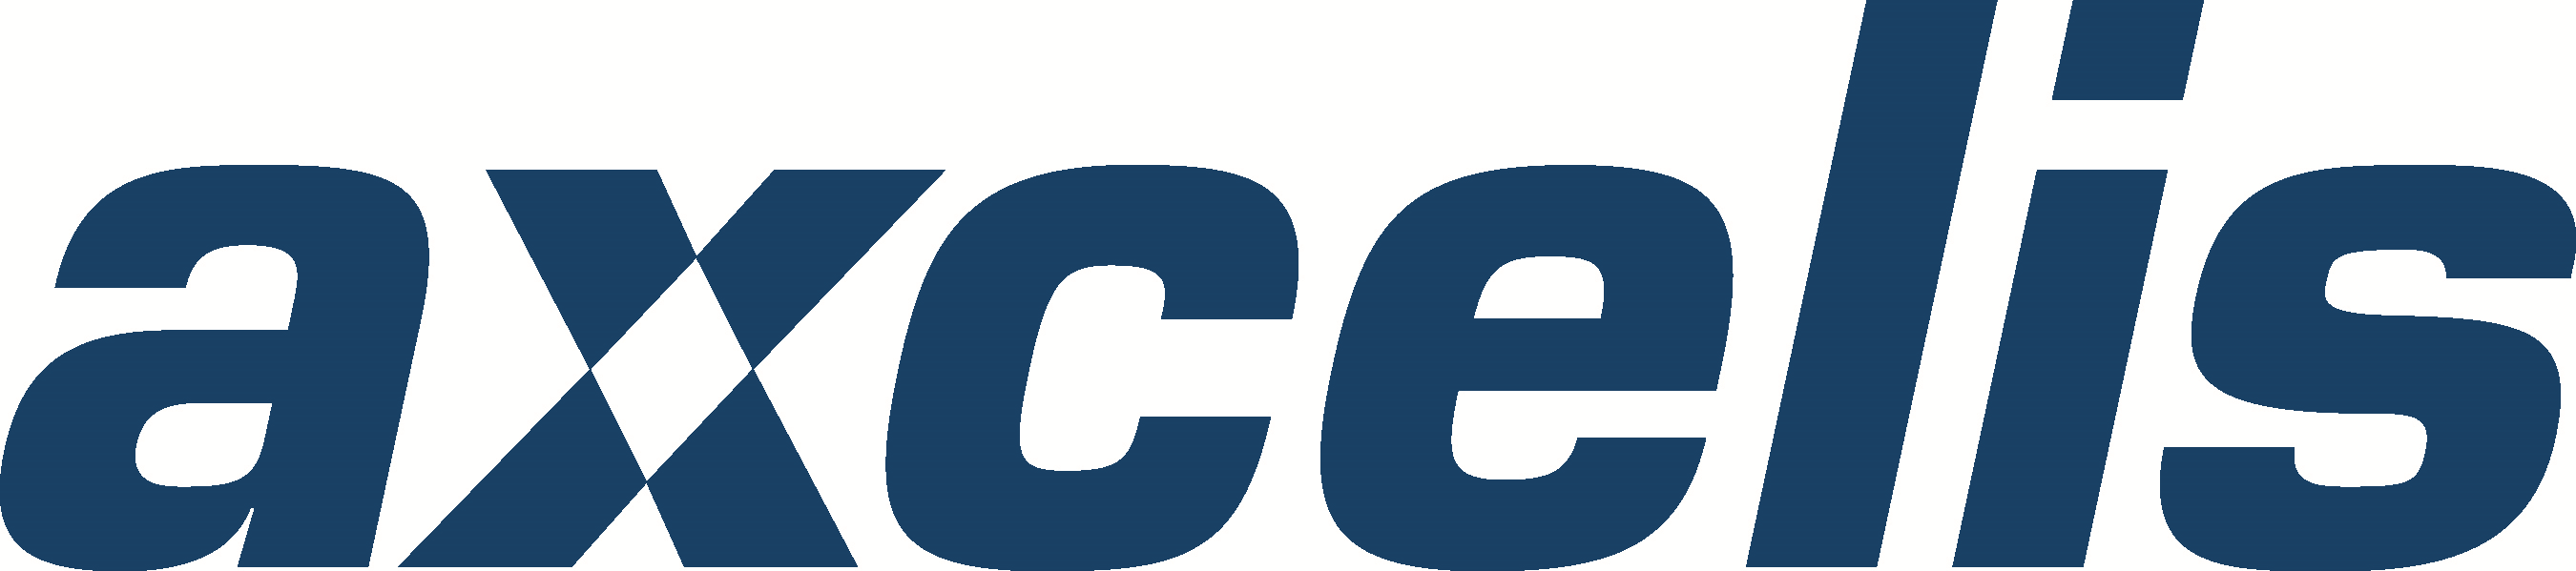 Axcelis Technologies Inc logo